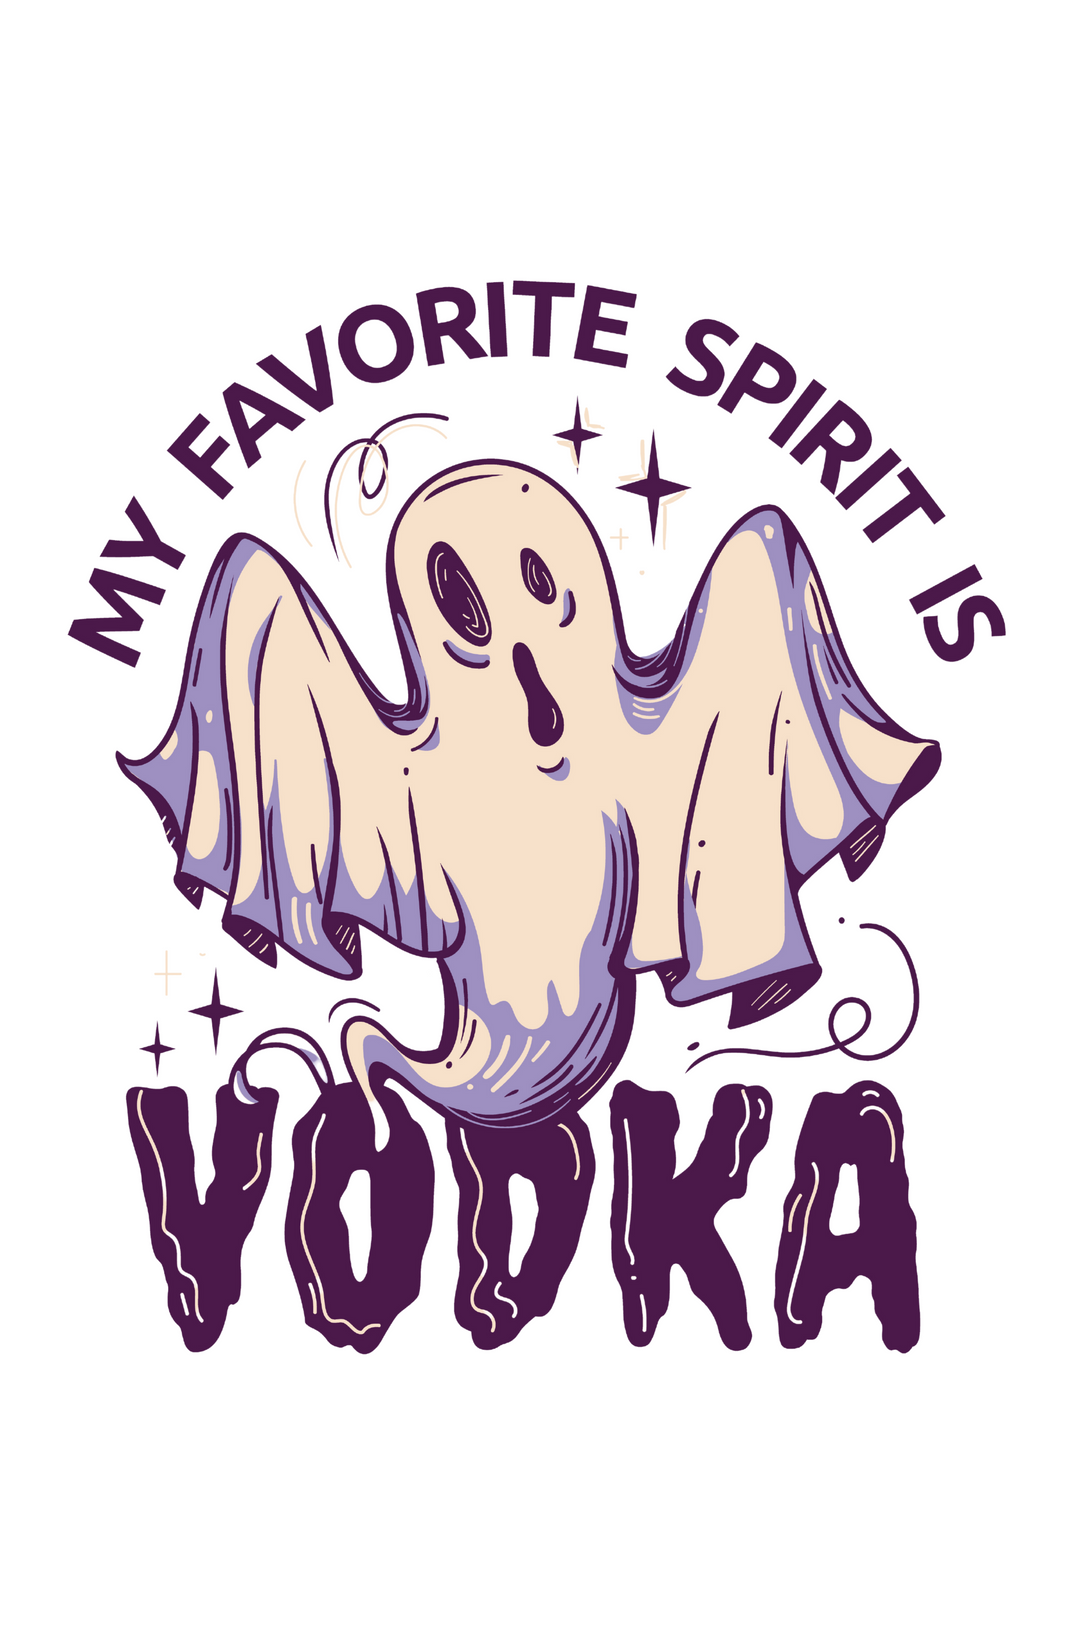 My Favourite Spirit Is Vodka Printed T-Shirt For Men - WowWaves - 1